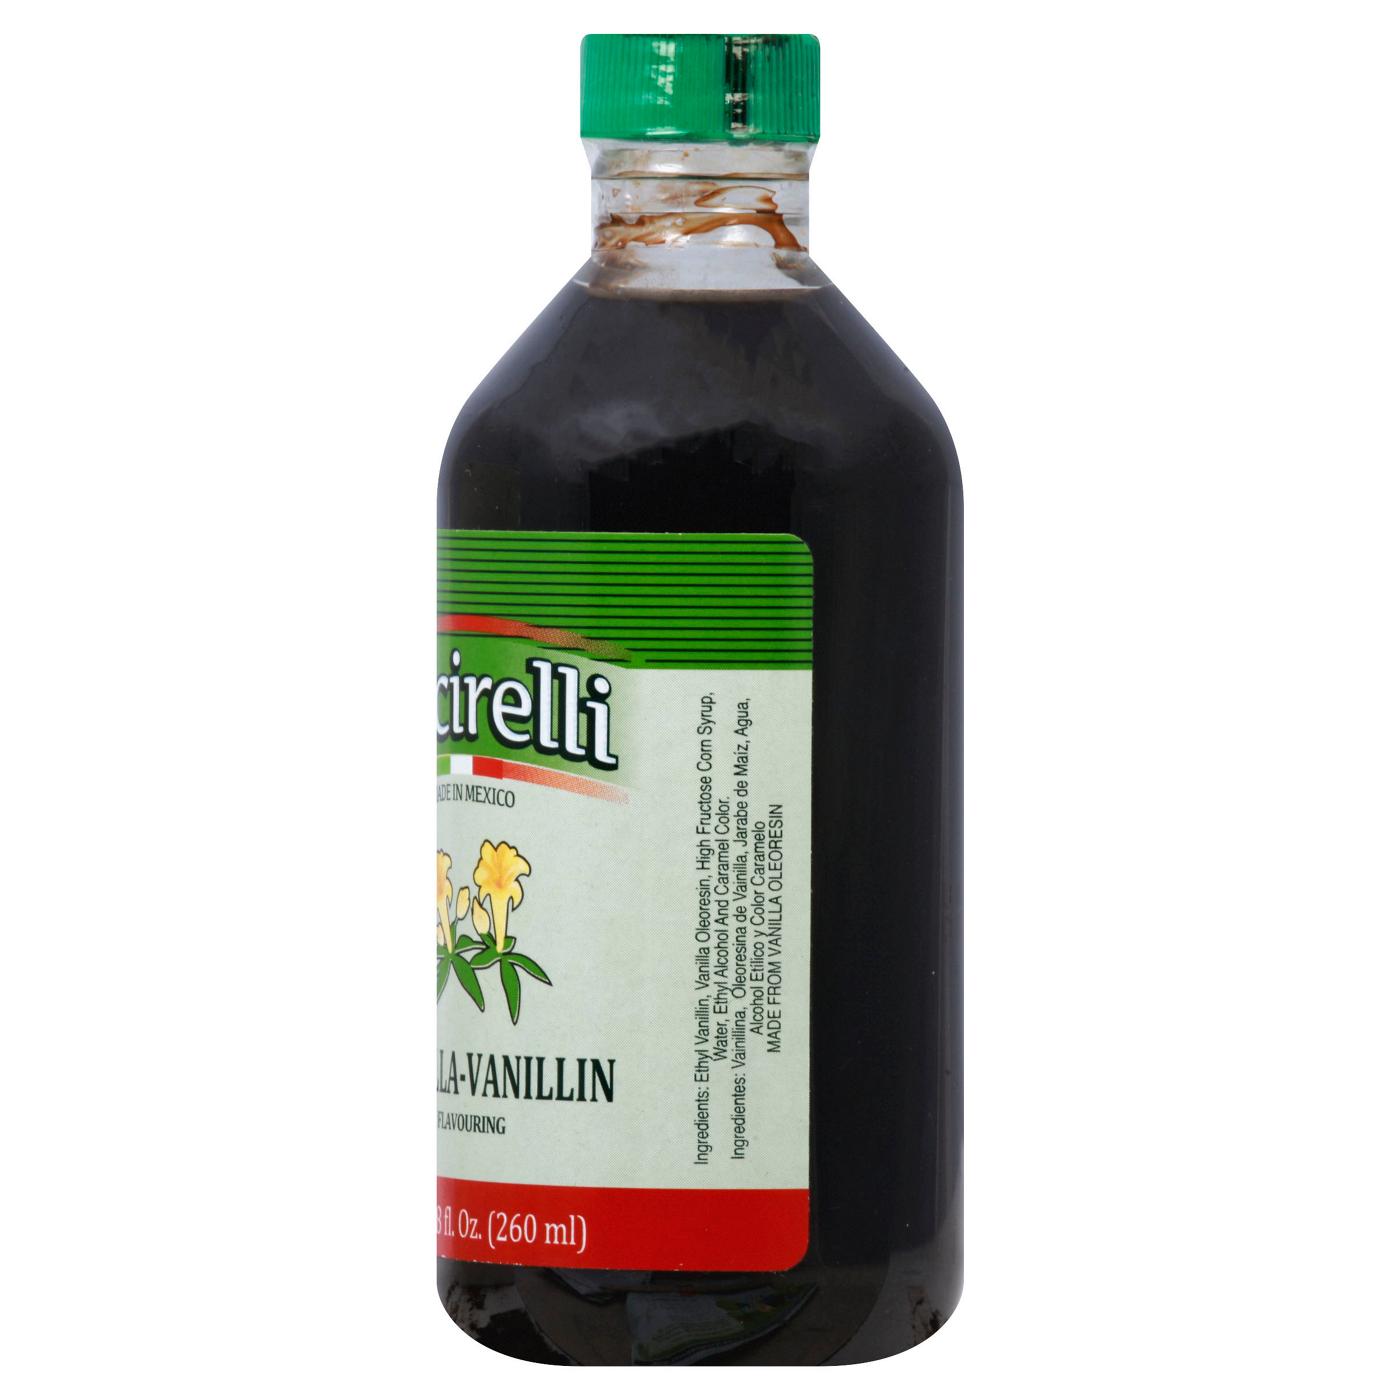 Alcirelli Pure Vanilla Extract; image 2 of 2